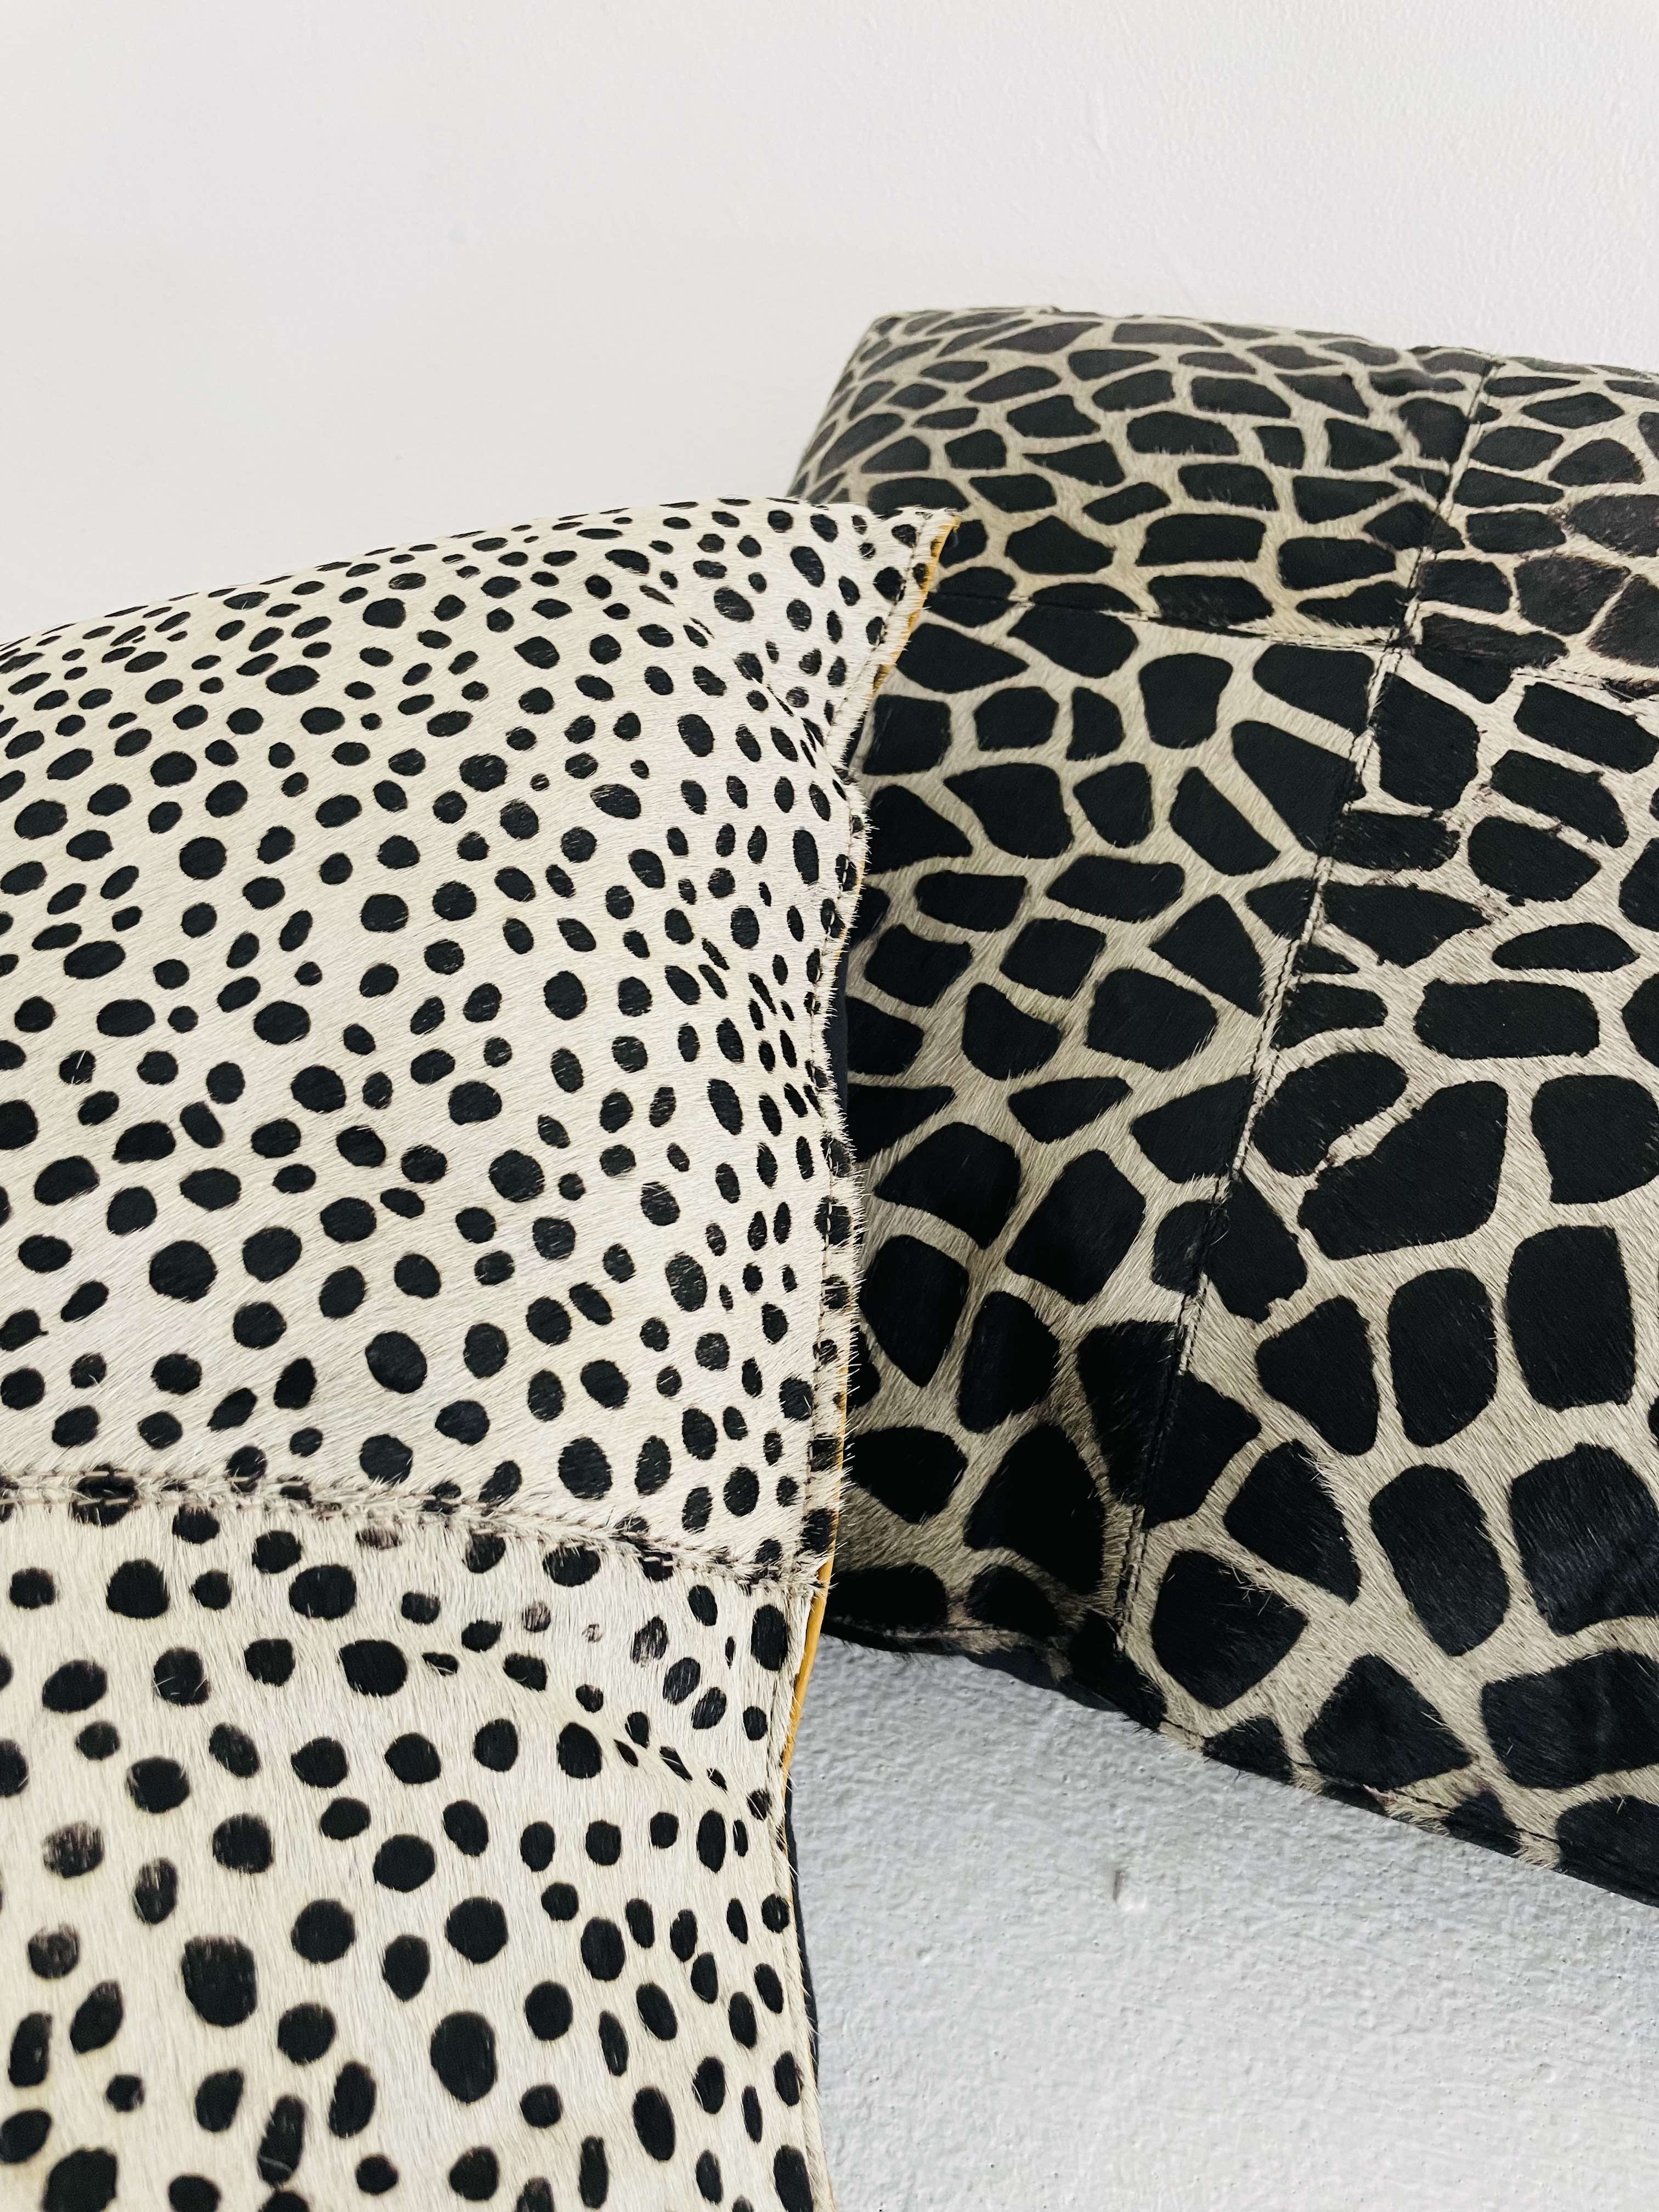 Leopard floor cushion